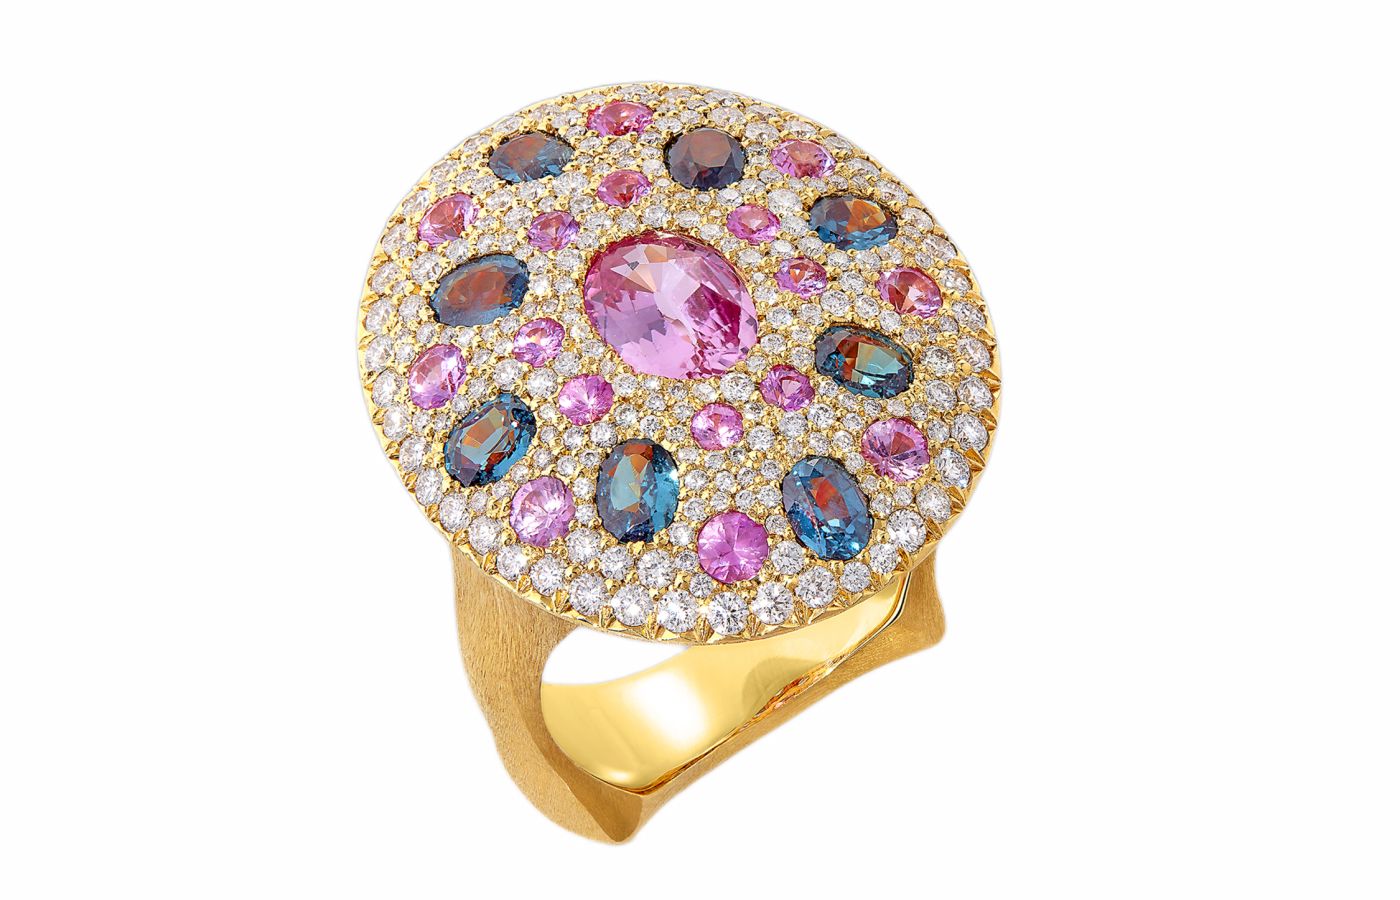 Ricardo Basta Fine Jewelry on Instagram: “This pink Diamond